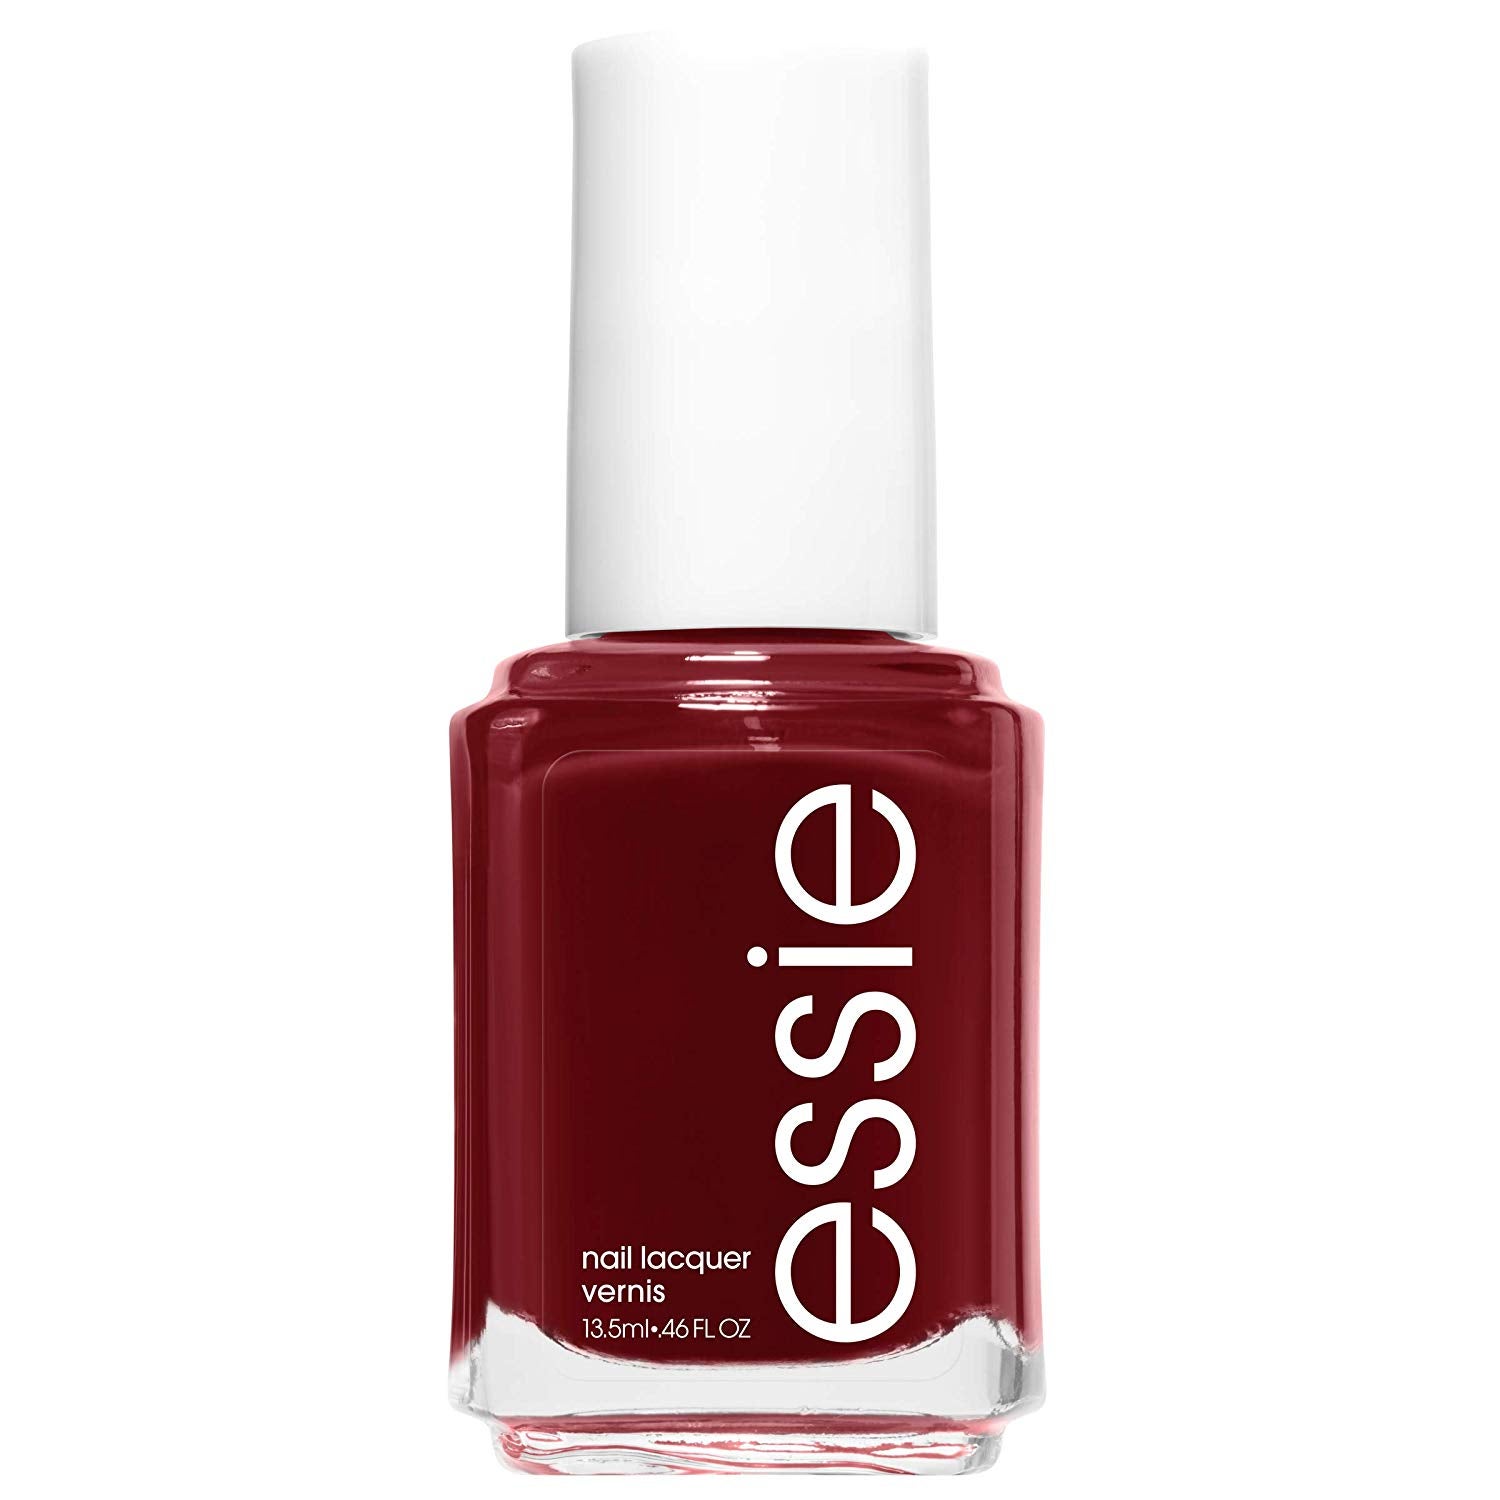 chic, sassy and elegant. essie nail polish provides flawless, streak free c...